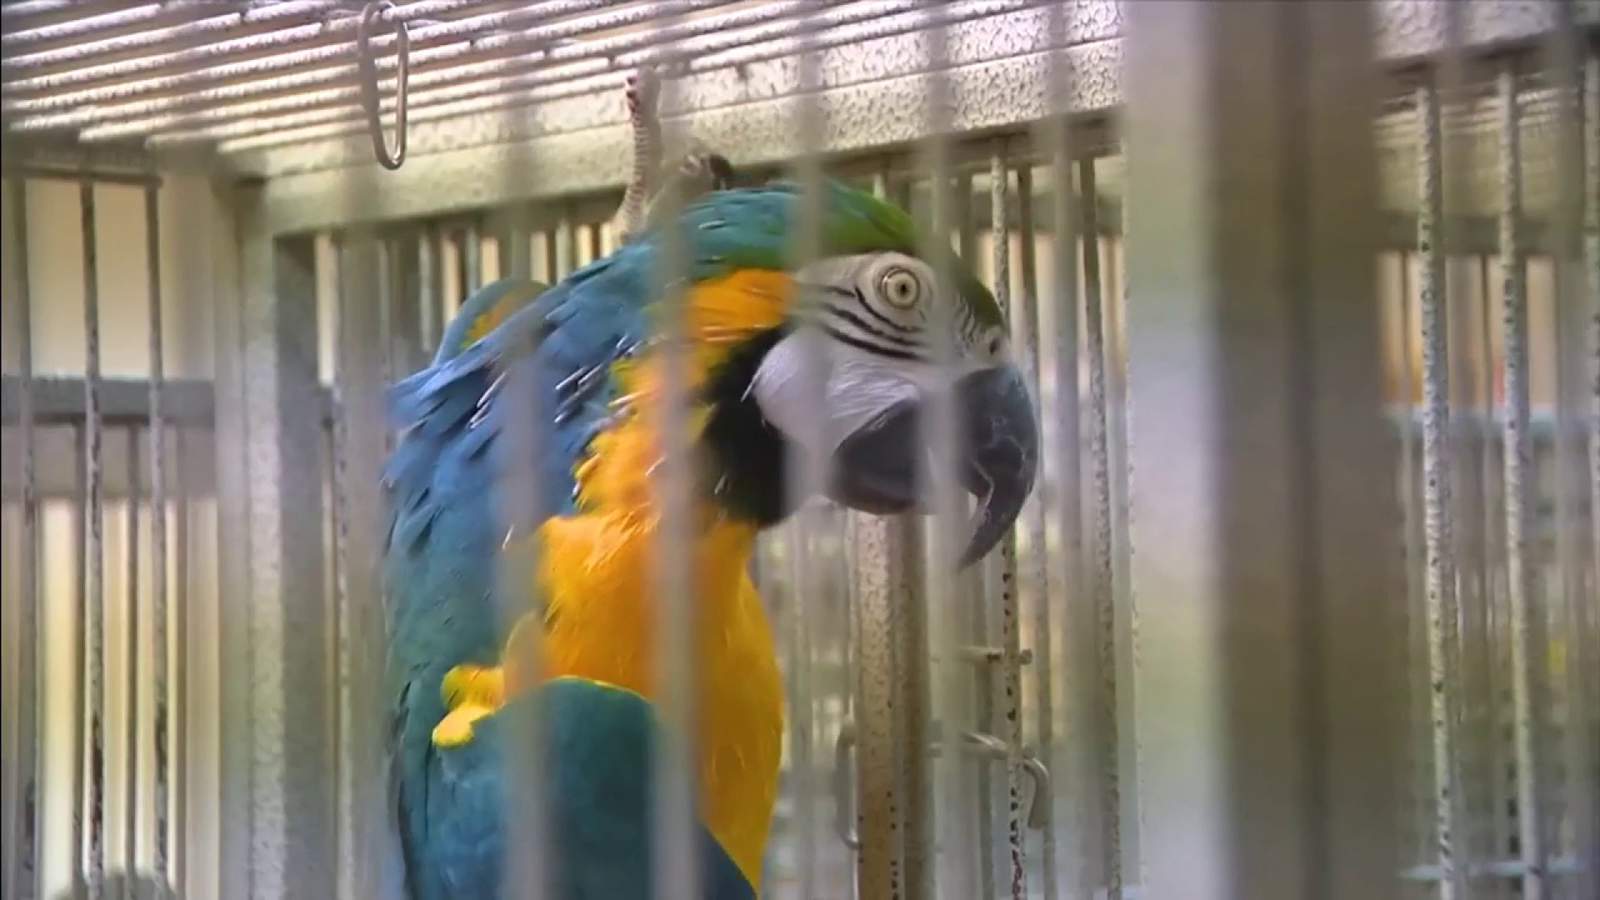 Listen up for loud exotic birds that were stolen in Davie, wildlife expert Ron Magill says